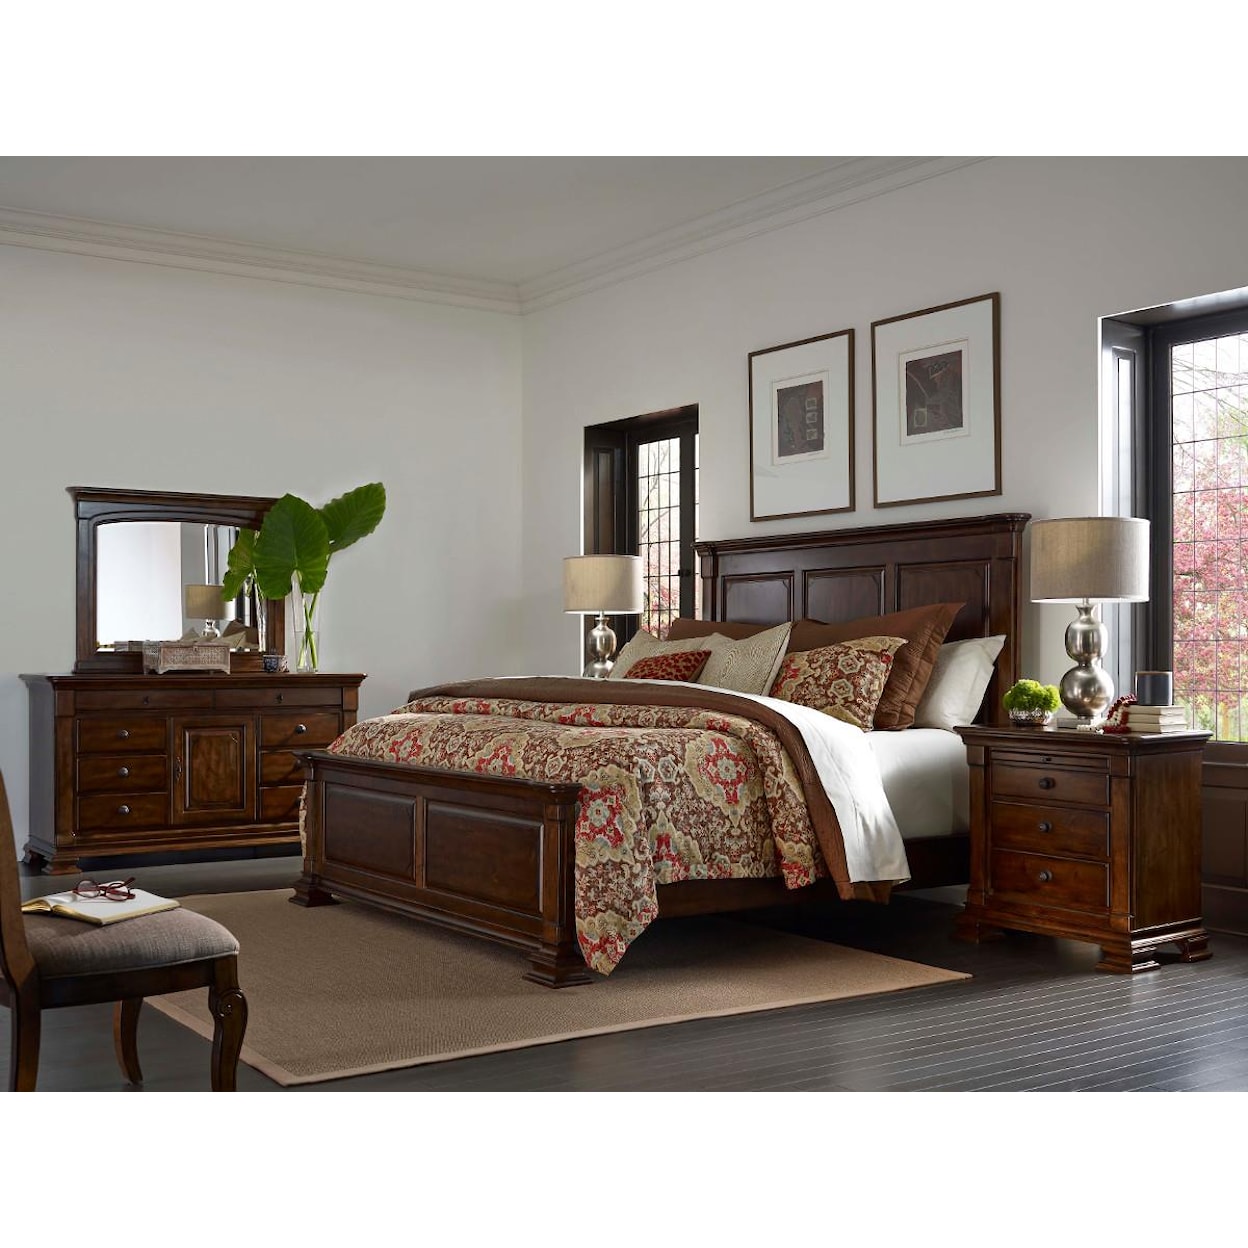 Kincaid Furniture Portolone Queen Bedroom Group